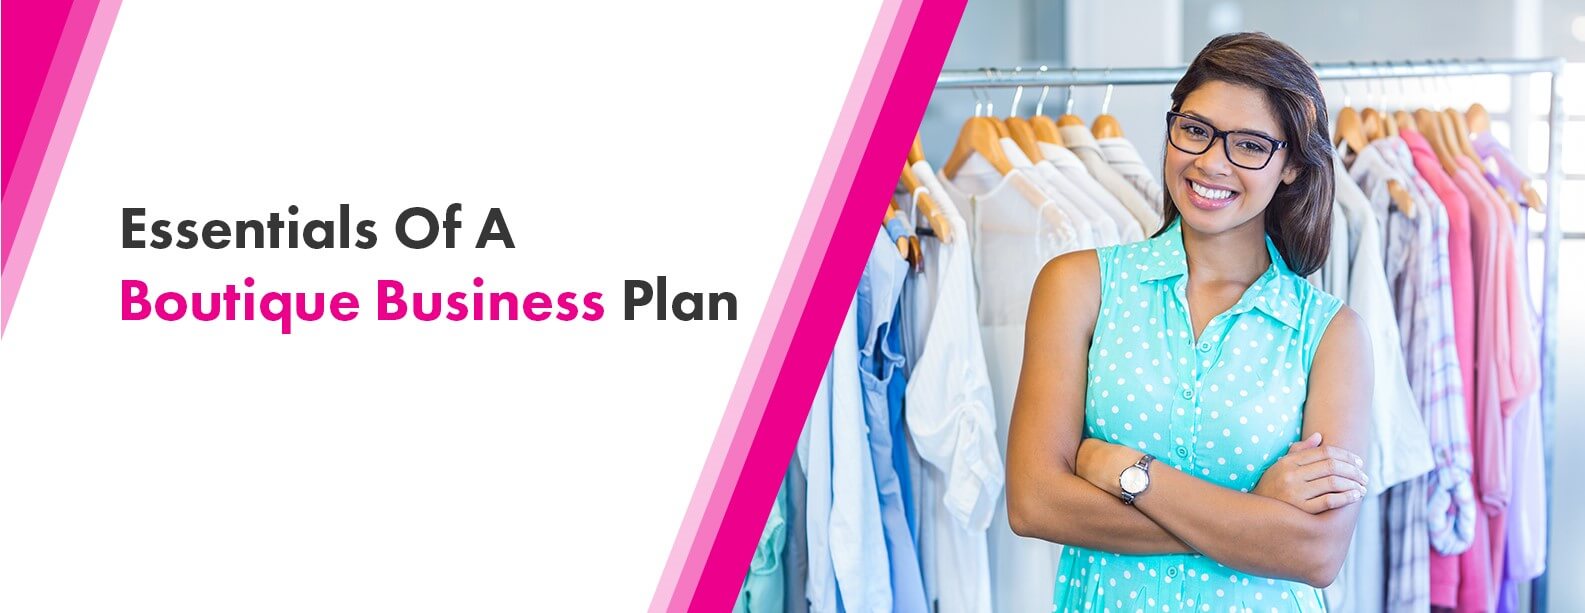 Essentials Of A Boutique Business Plan